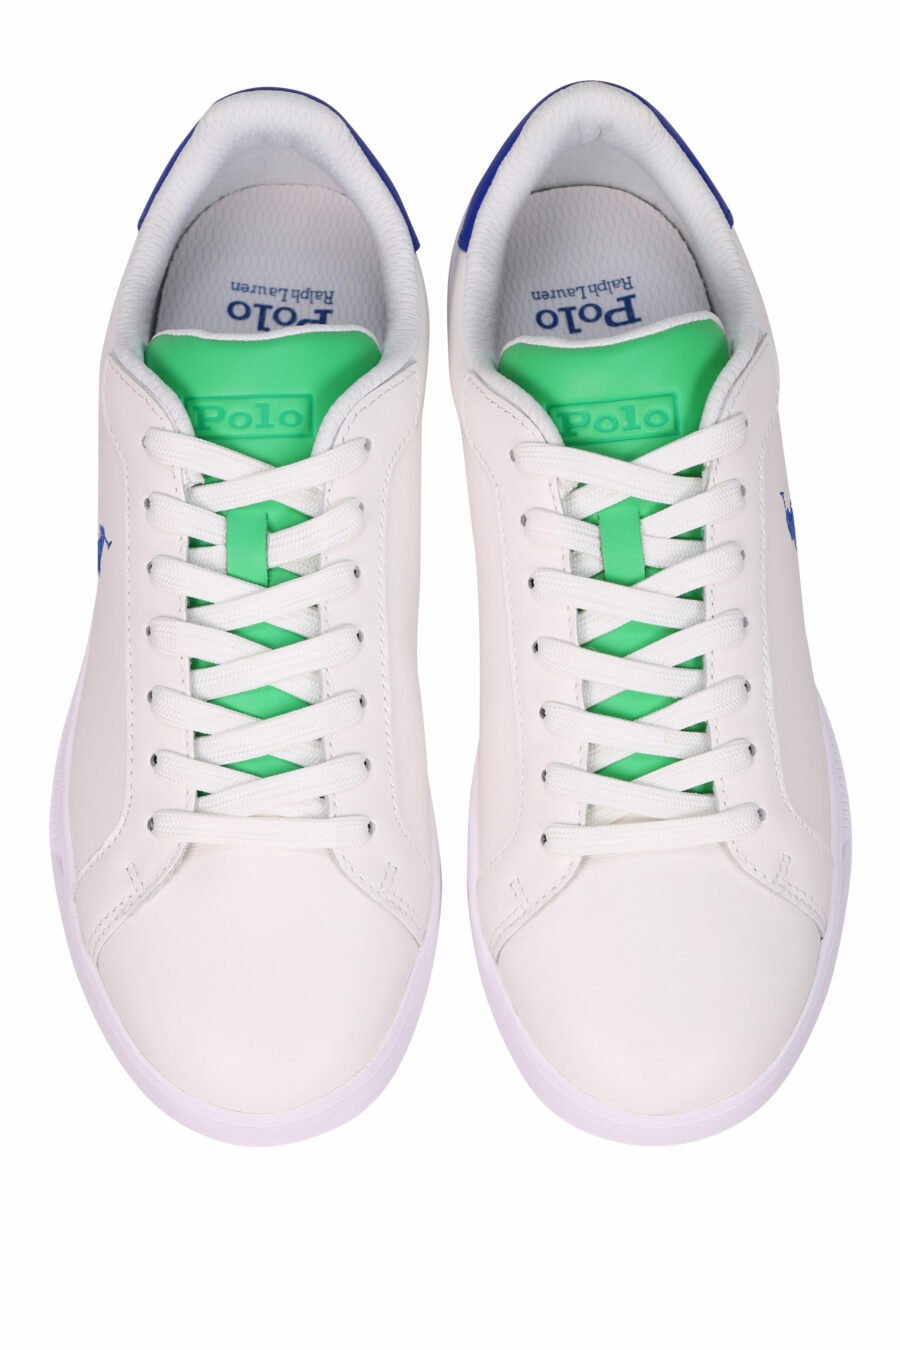 Zapatillas blancas con detalle verde y azul con minilogo "polo" - 3616535905740 4